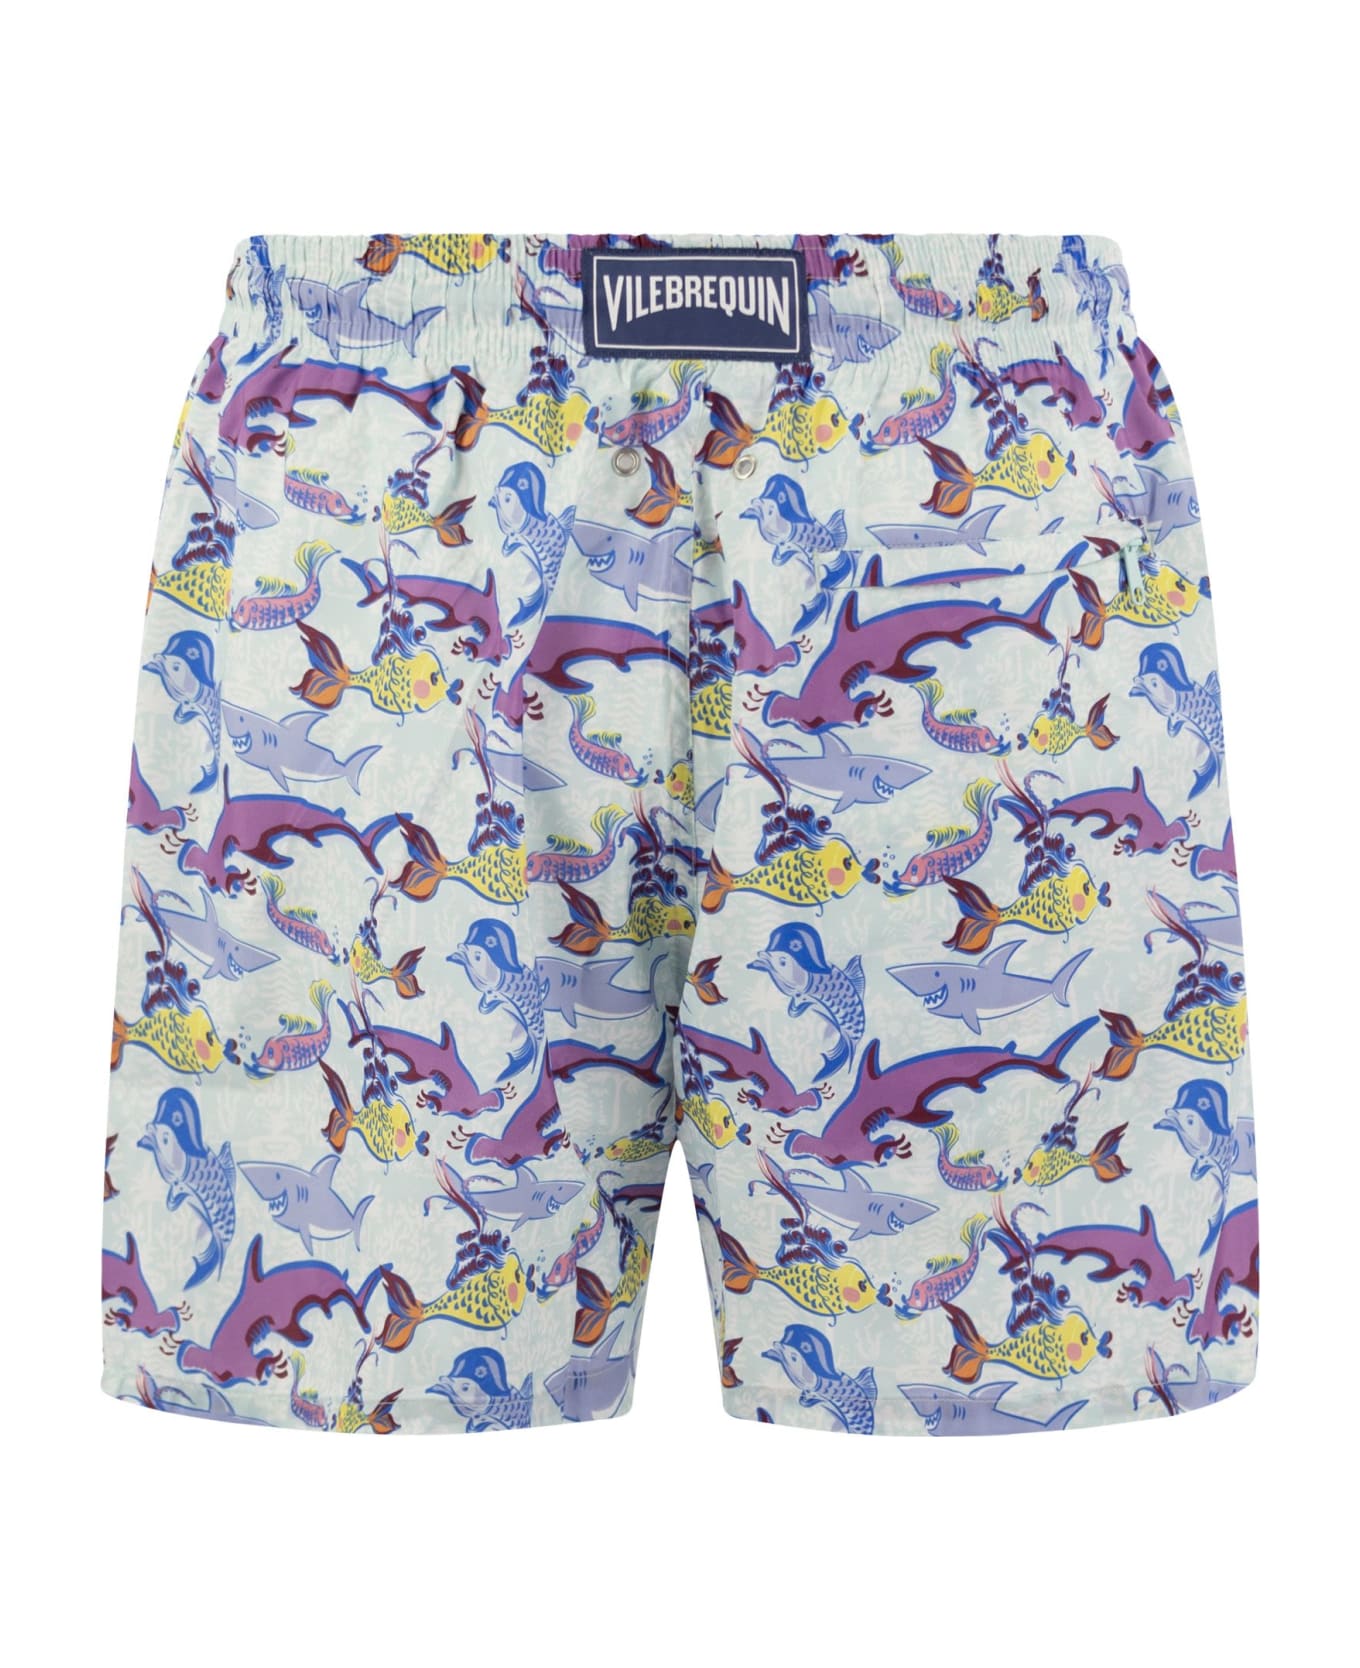 Vilebrequin Ultralight, Foldable Beach Shorts With Print - Light Blue